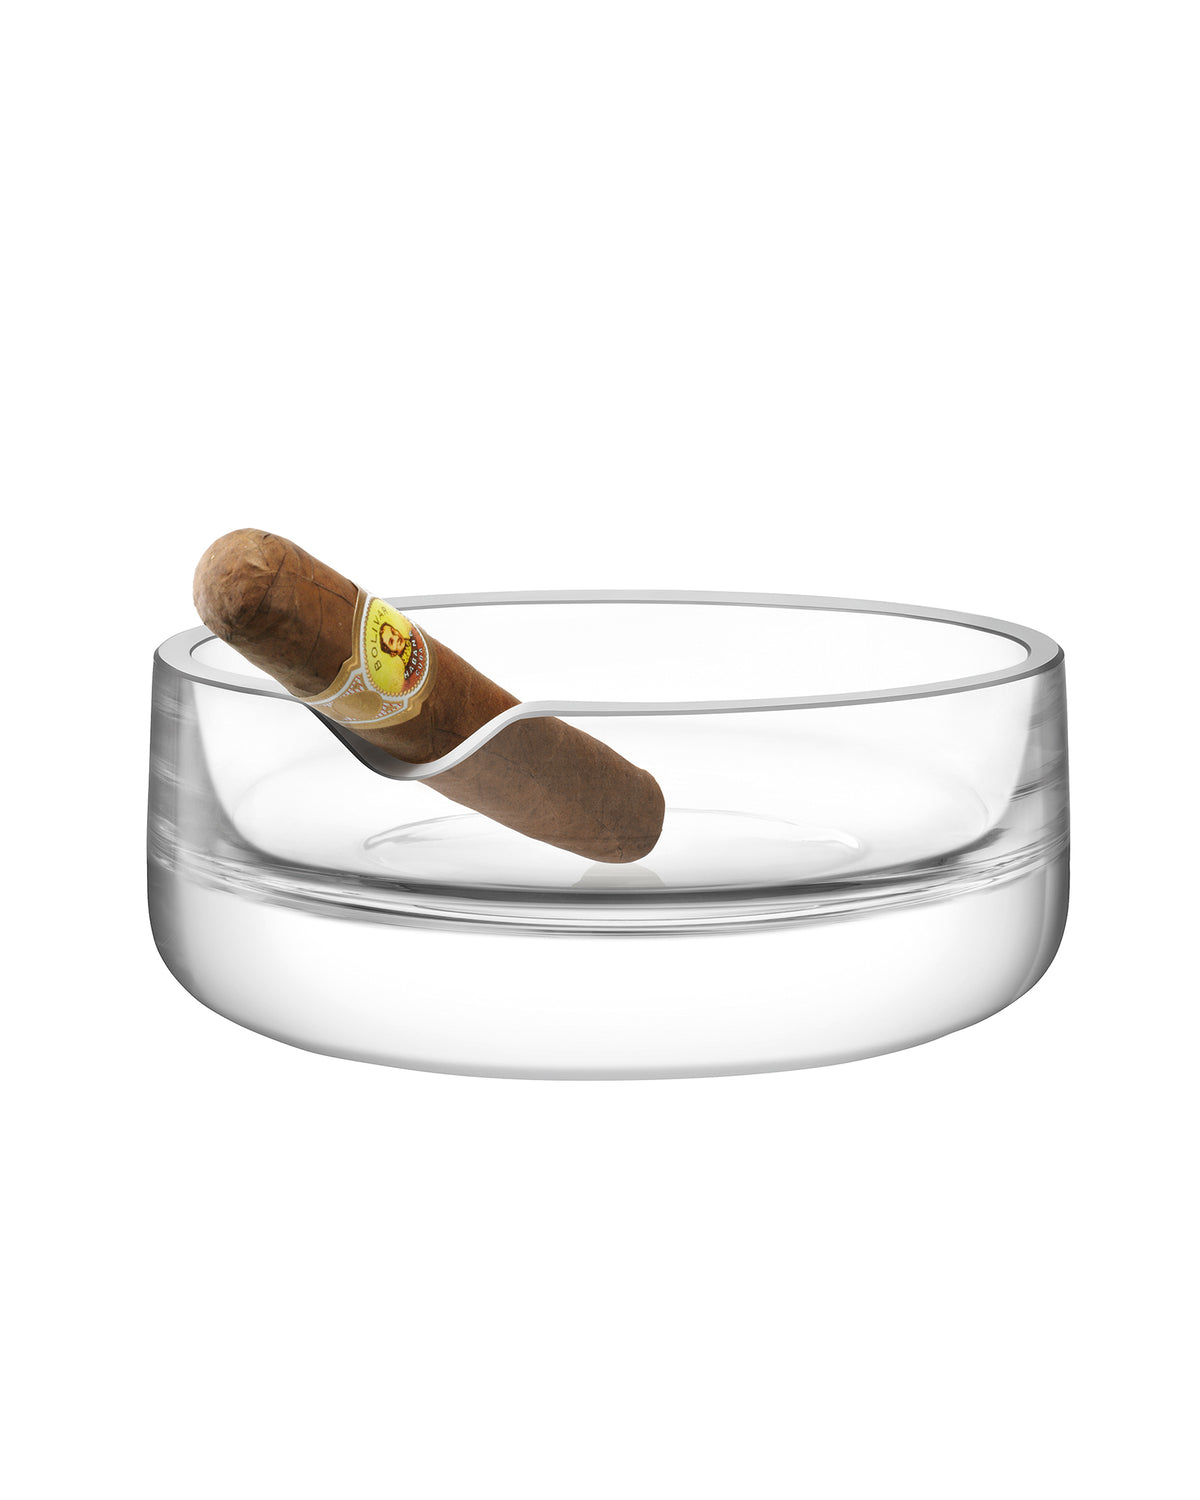 Bar Culture Cigar Ashtray